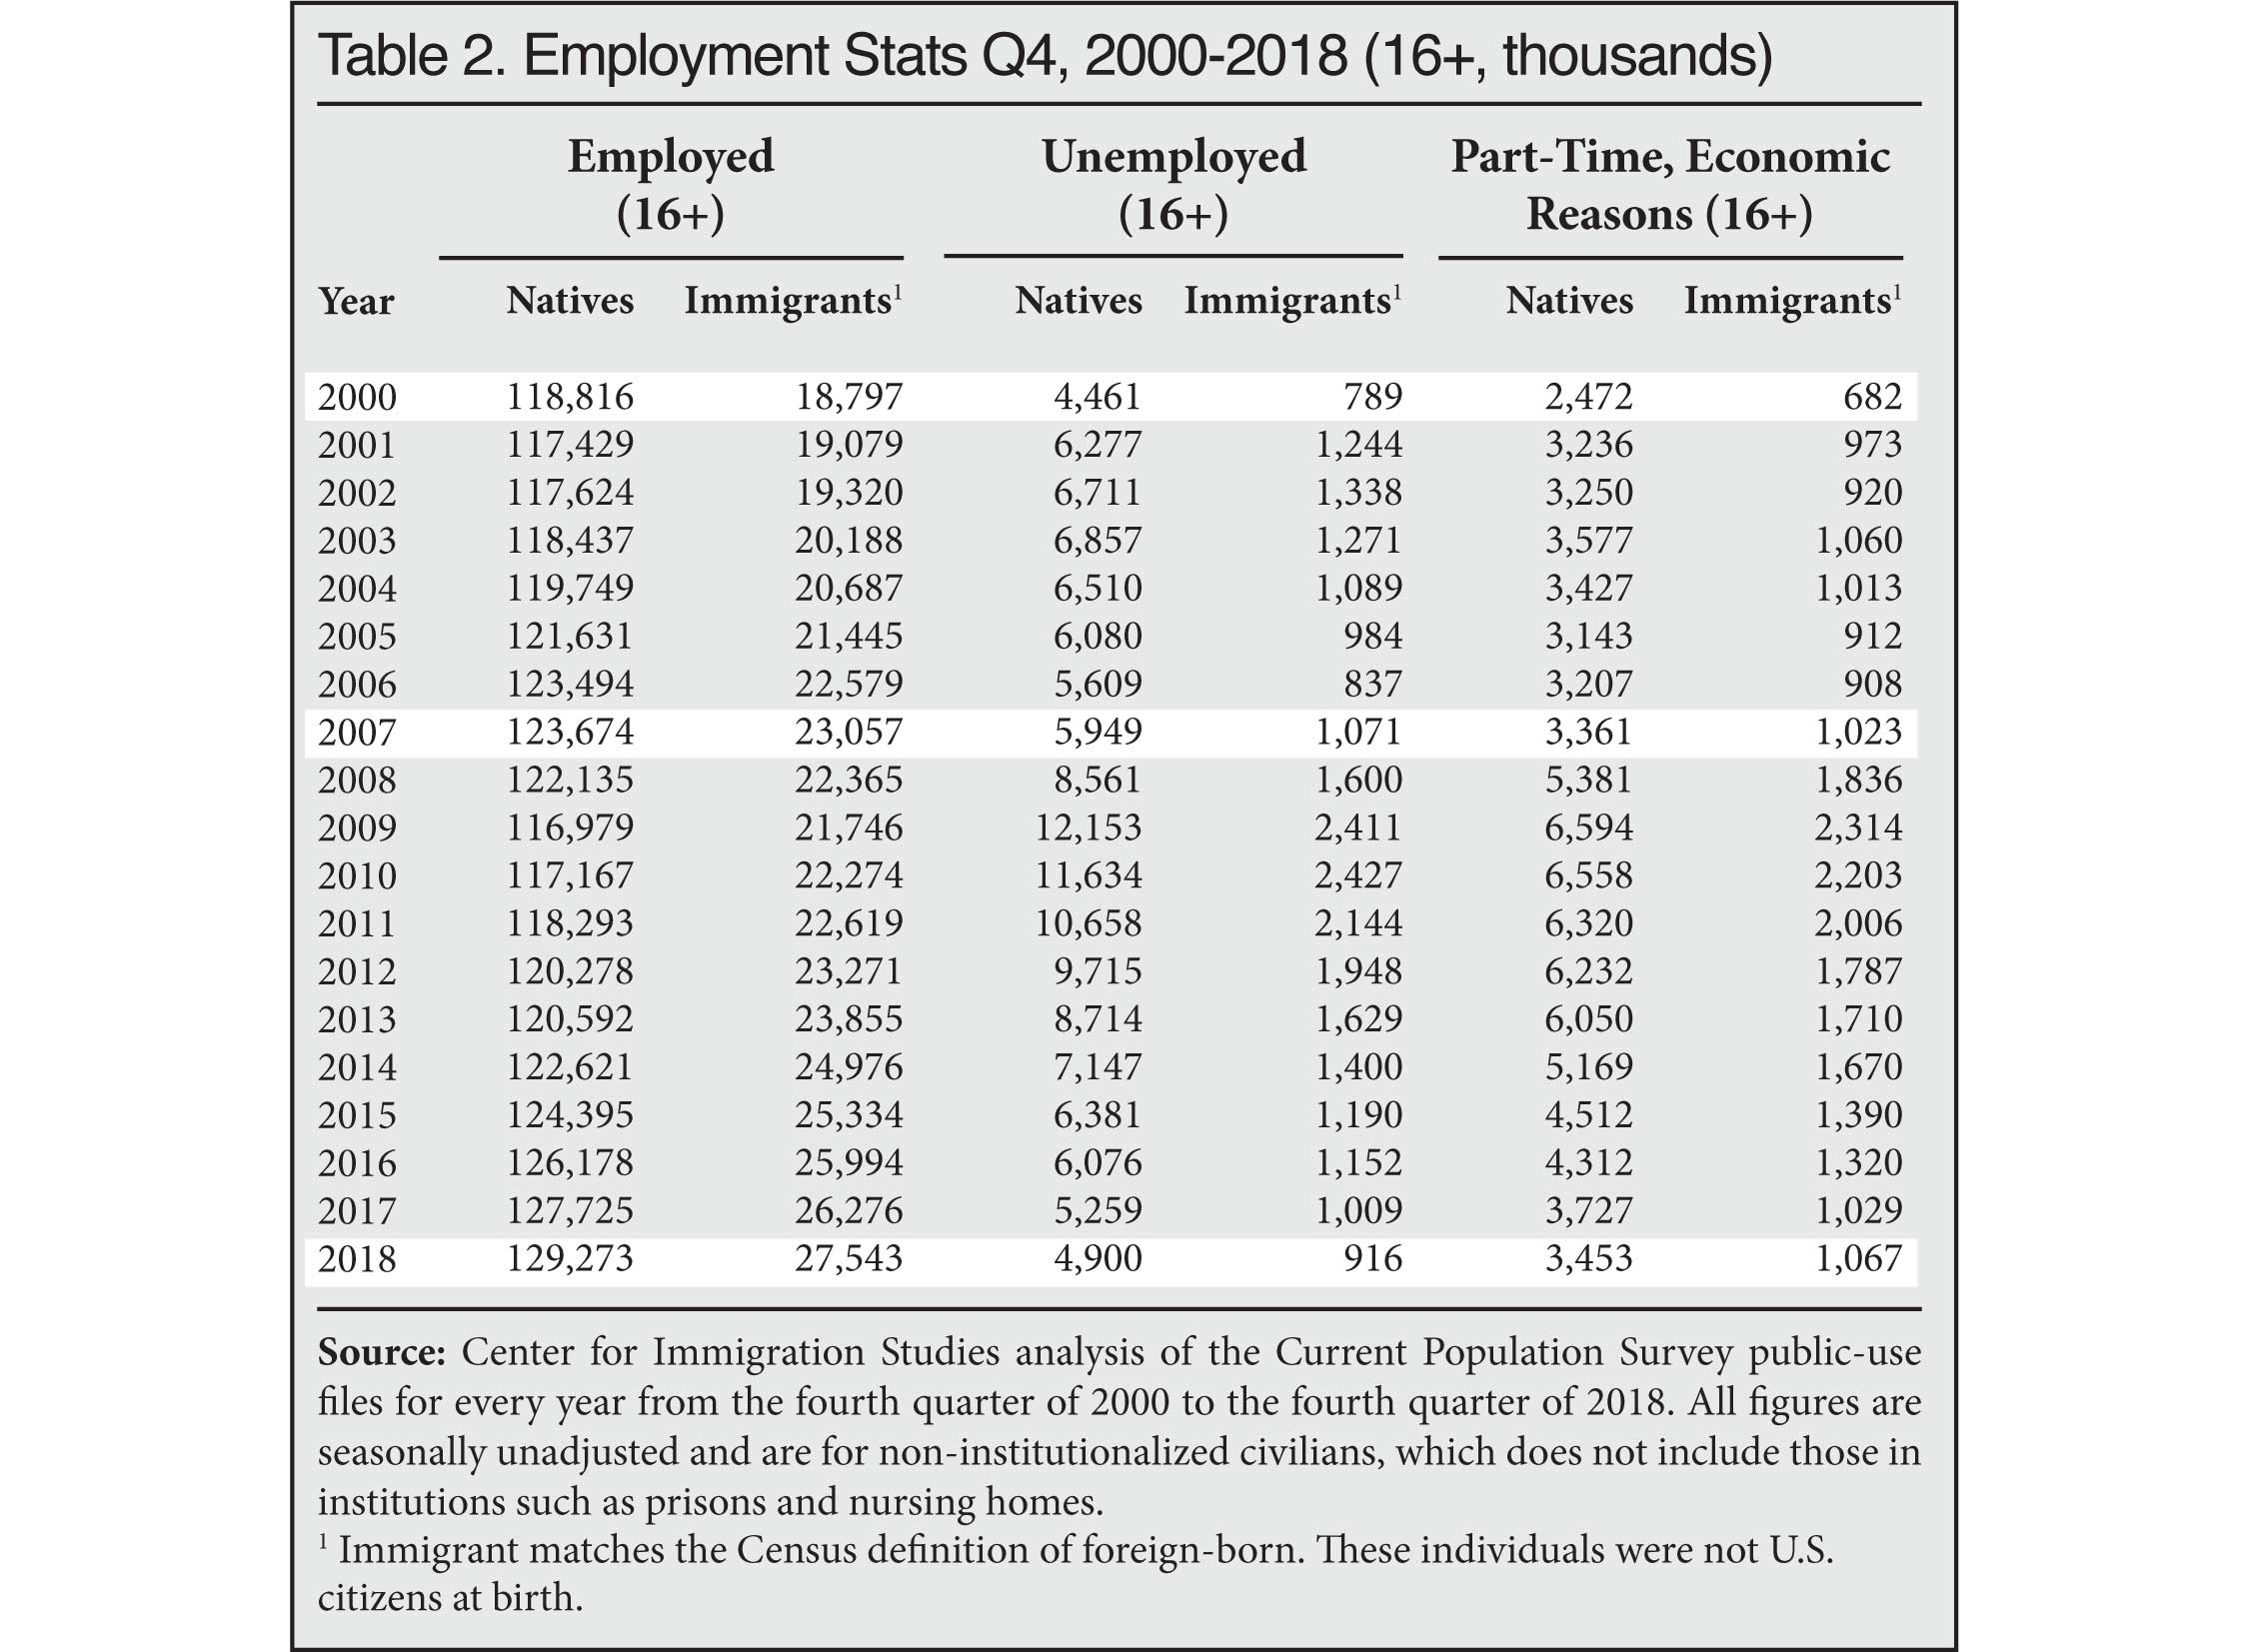 Table: Employment Statistics Q4, 2000-2018